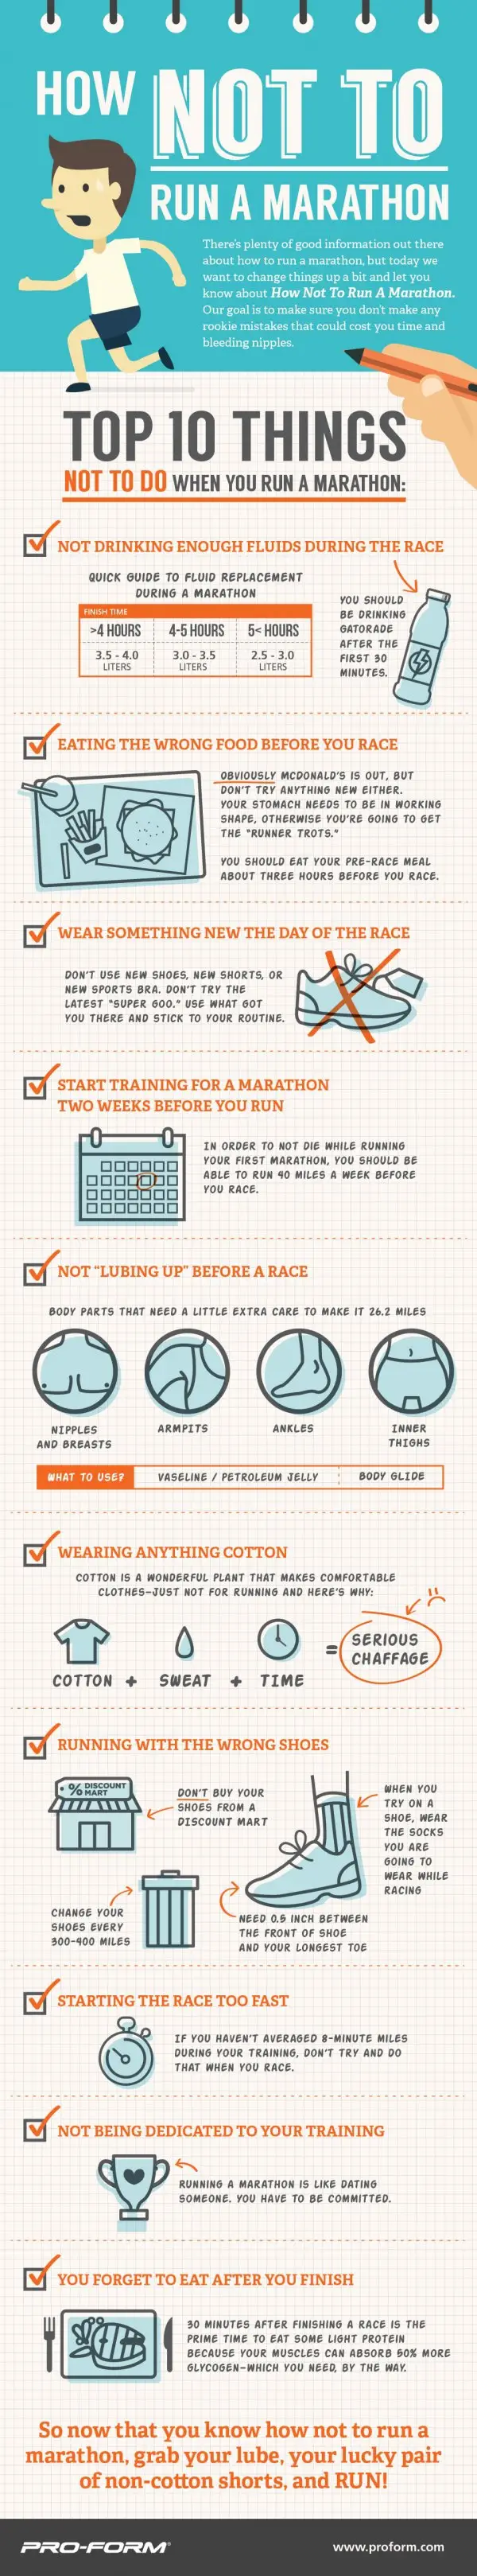 How NOT to Run a Marathon